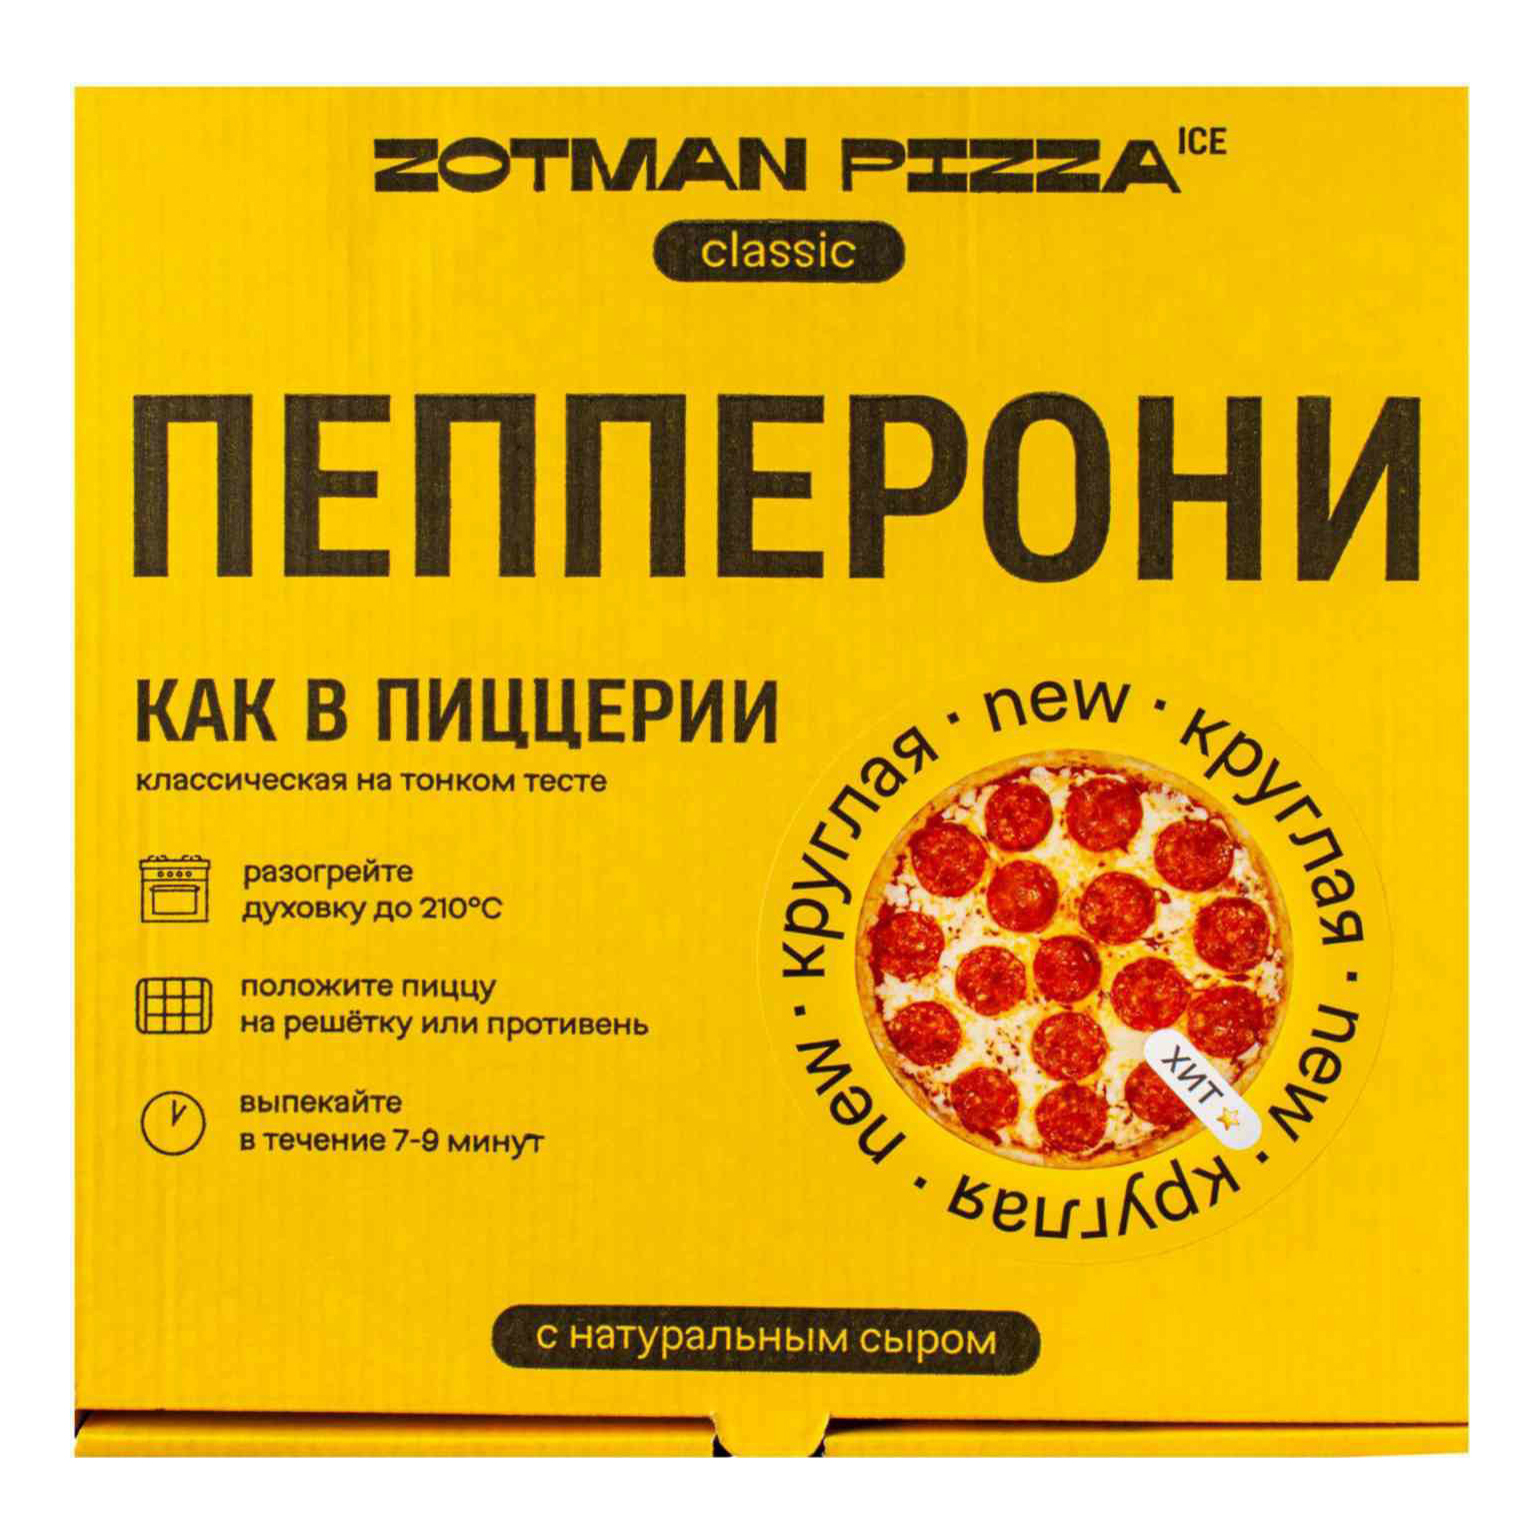 сколько стоит пицца пепперони в москве фото 39